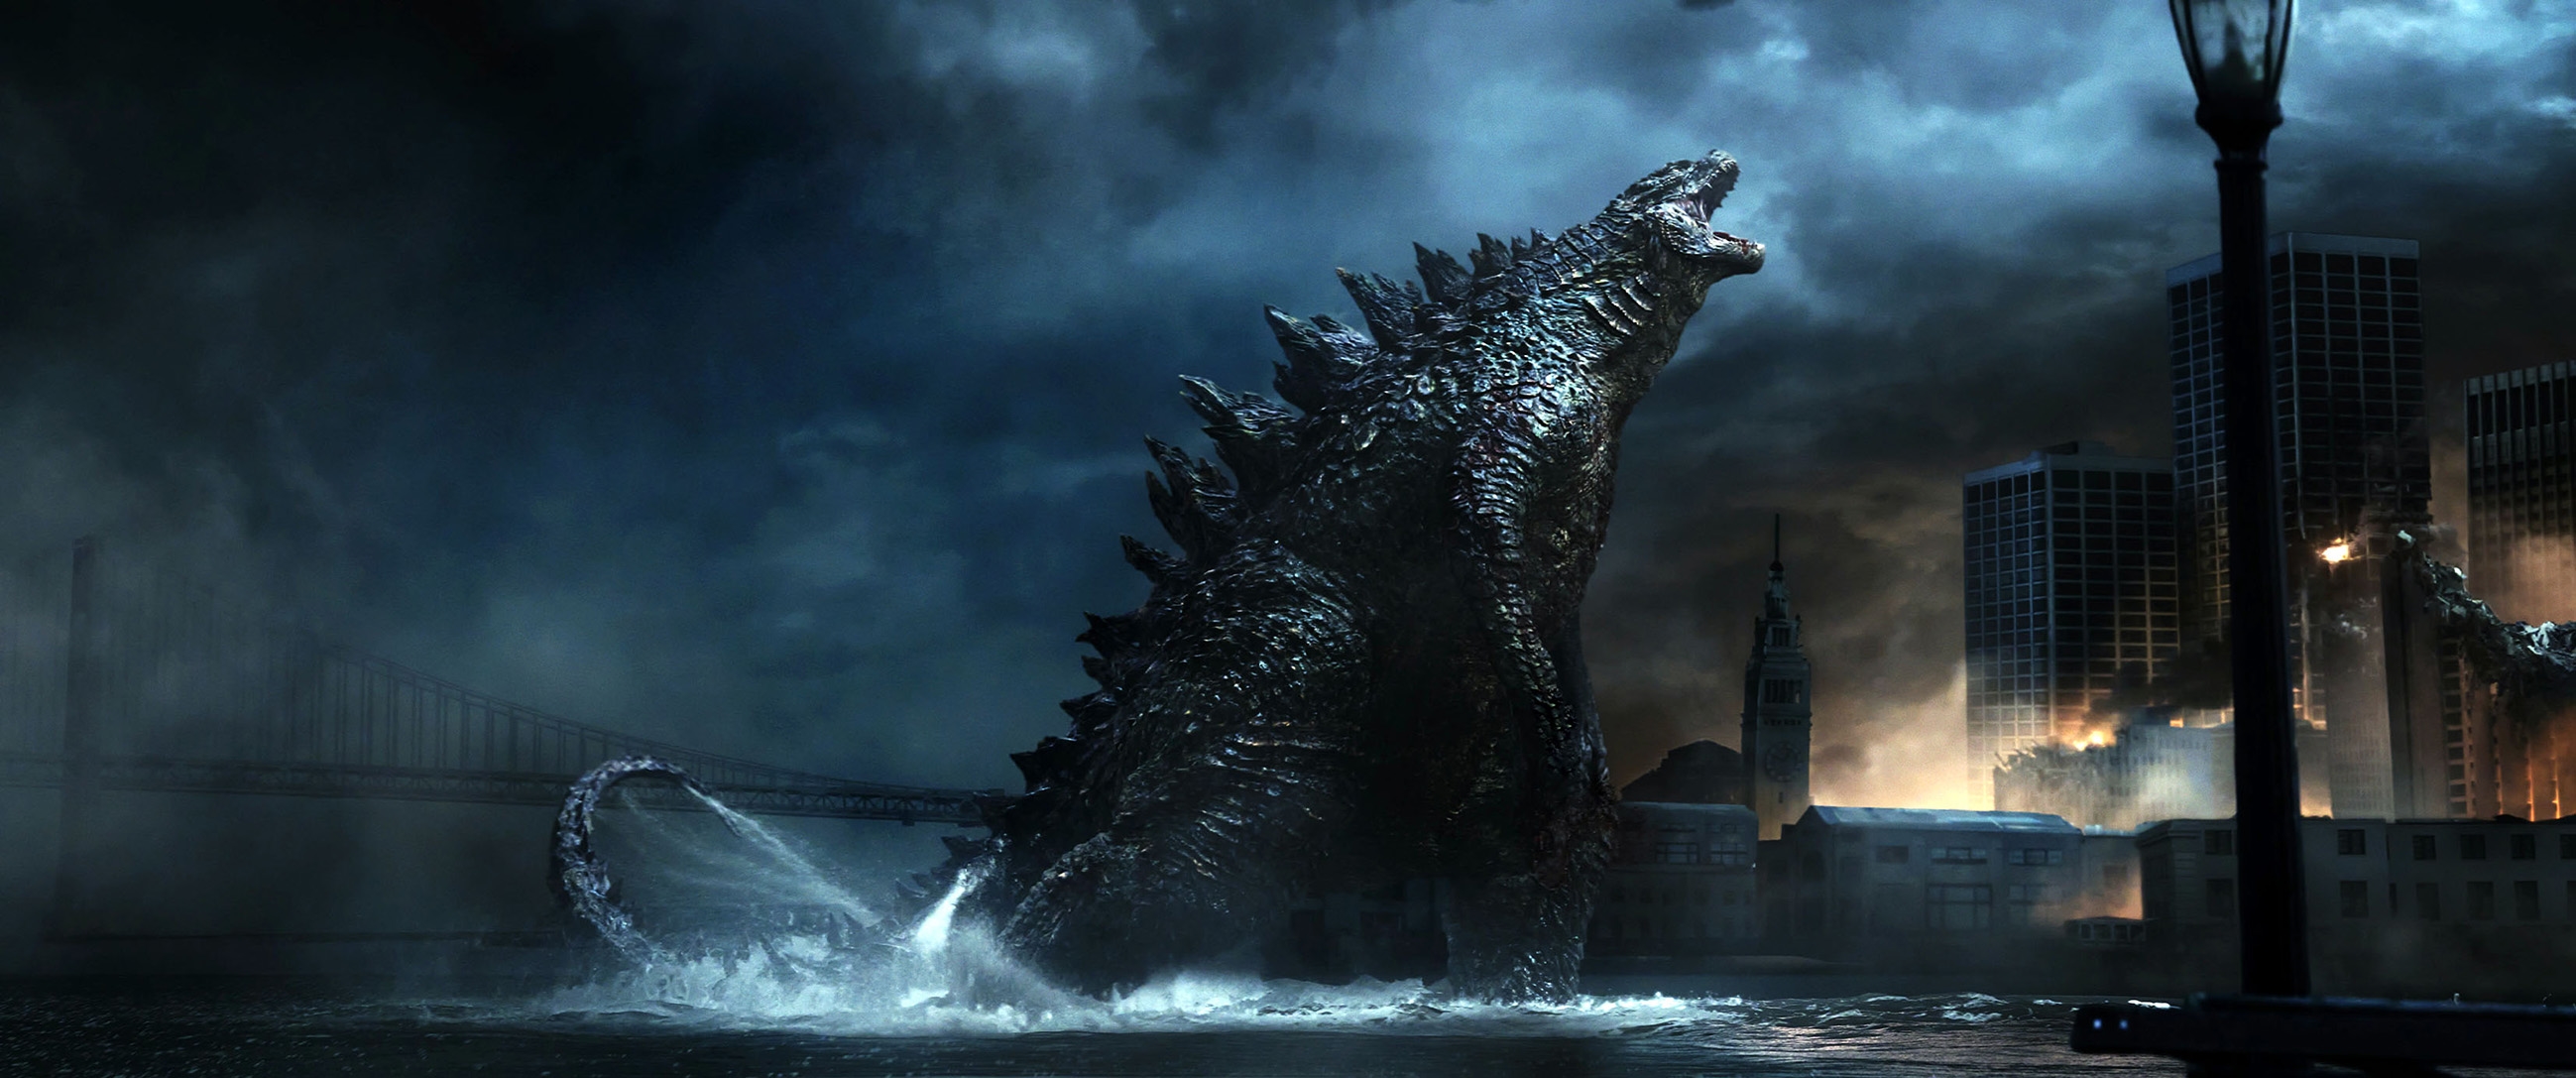 Image du film Godzilla d5725735-59b7-4358-8d0f-1d9329f8e582